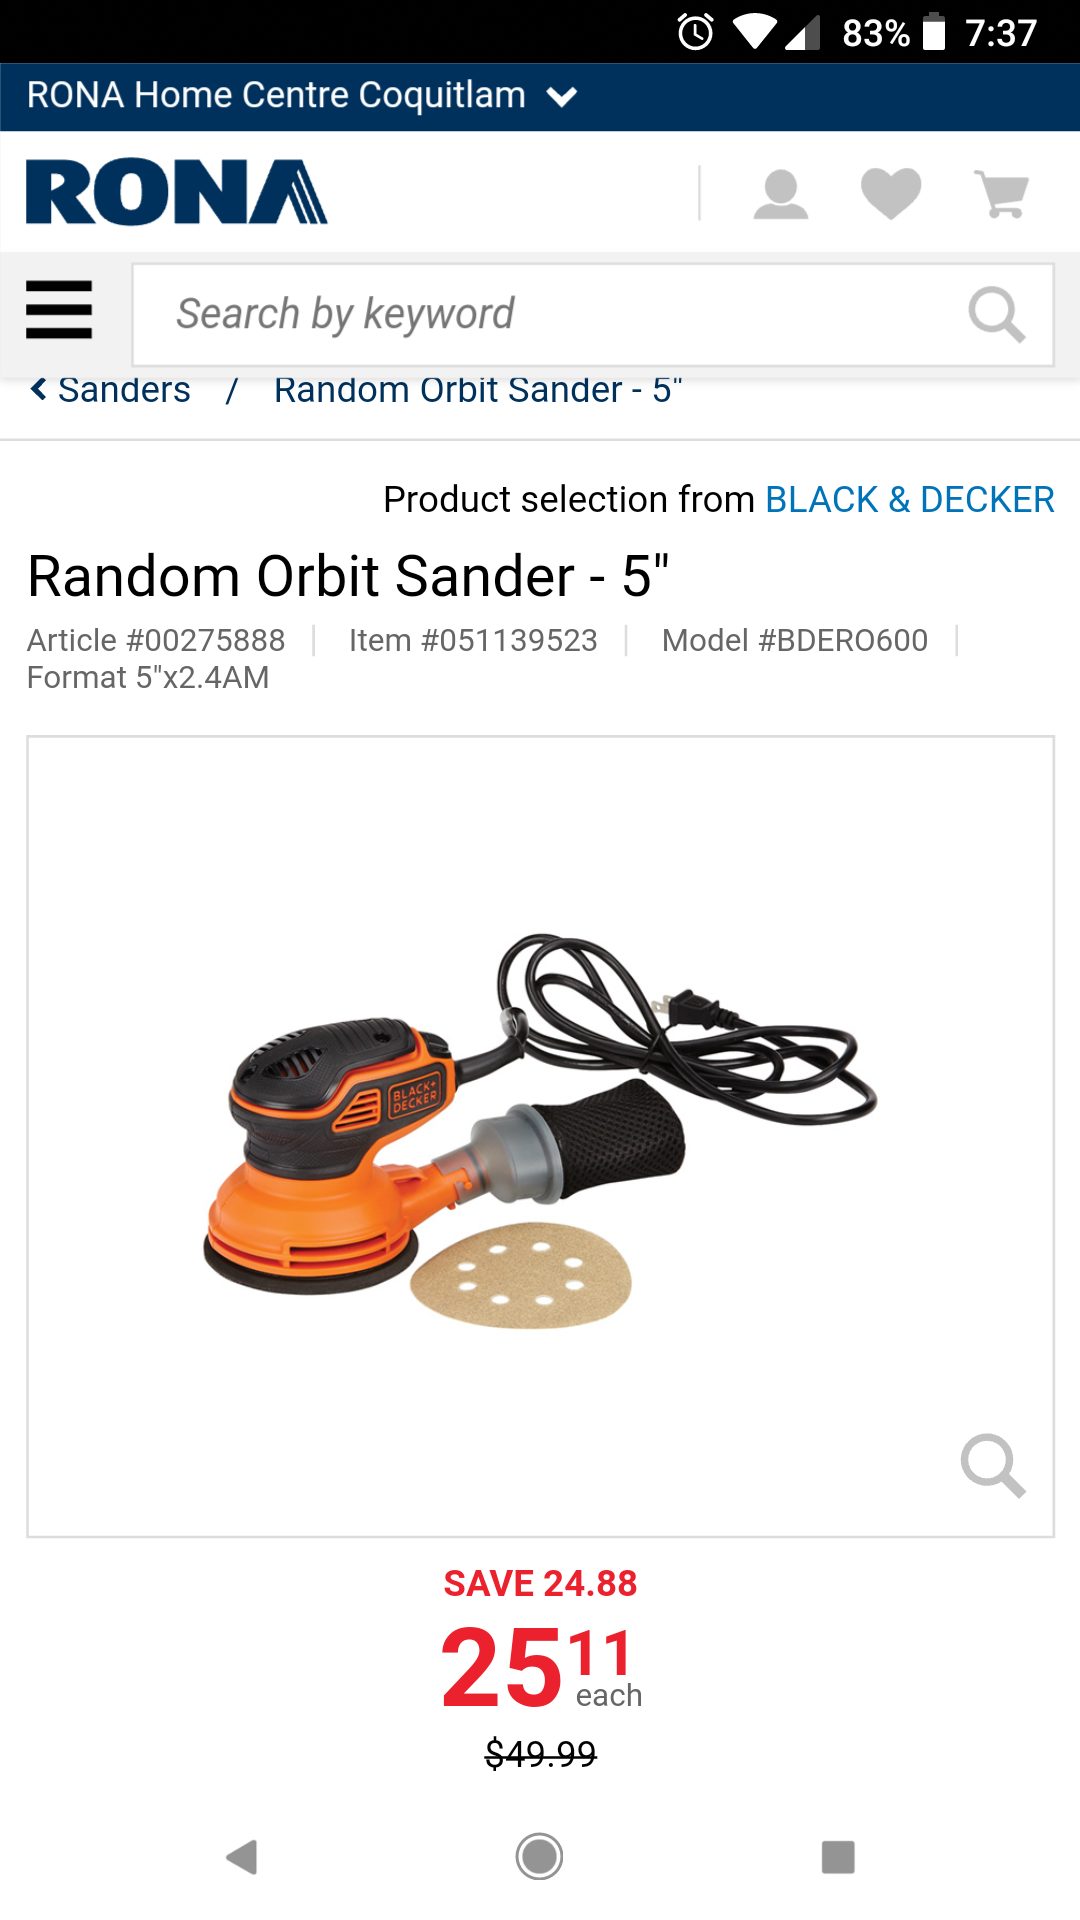 Black & Decker BDERO600 Random Orbit Sander